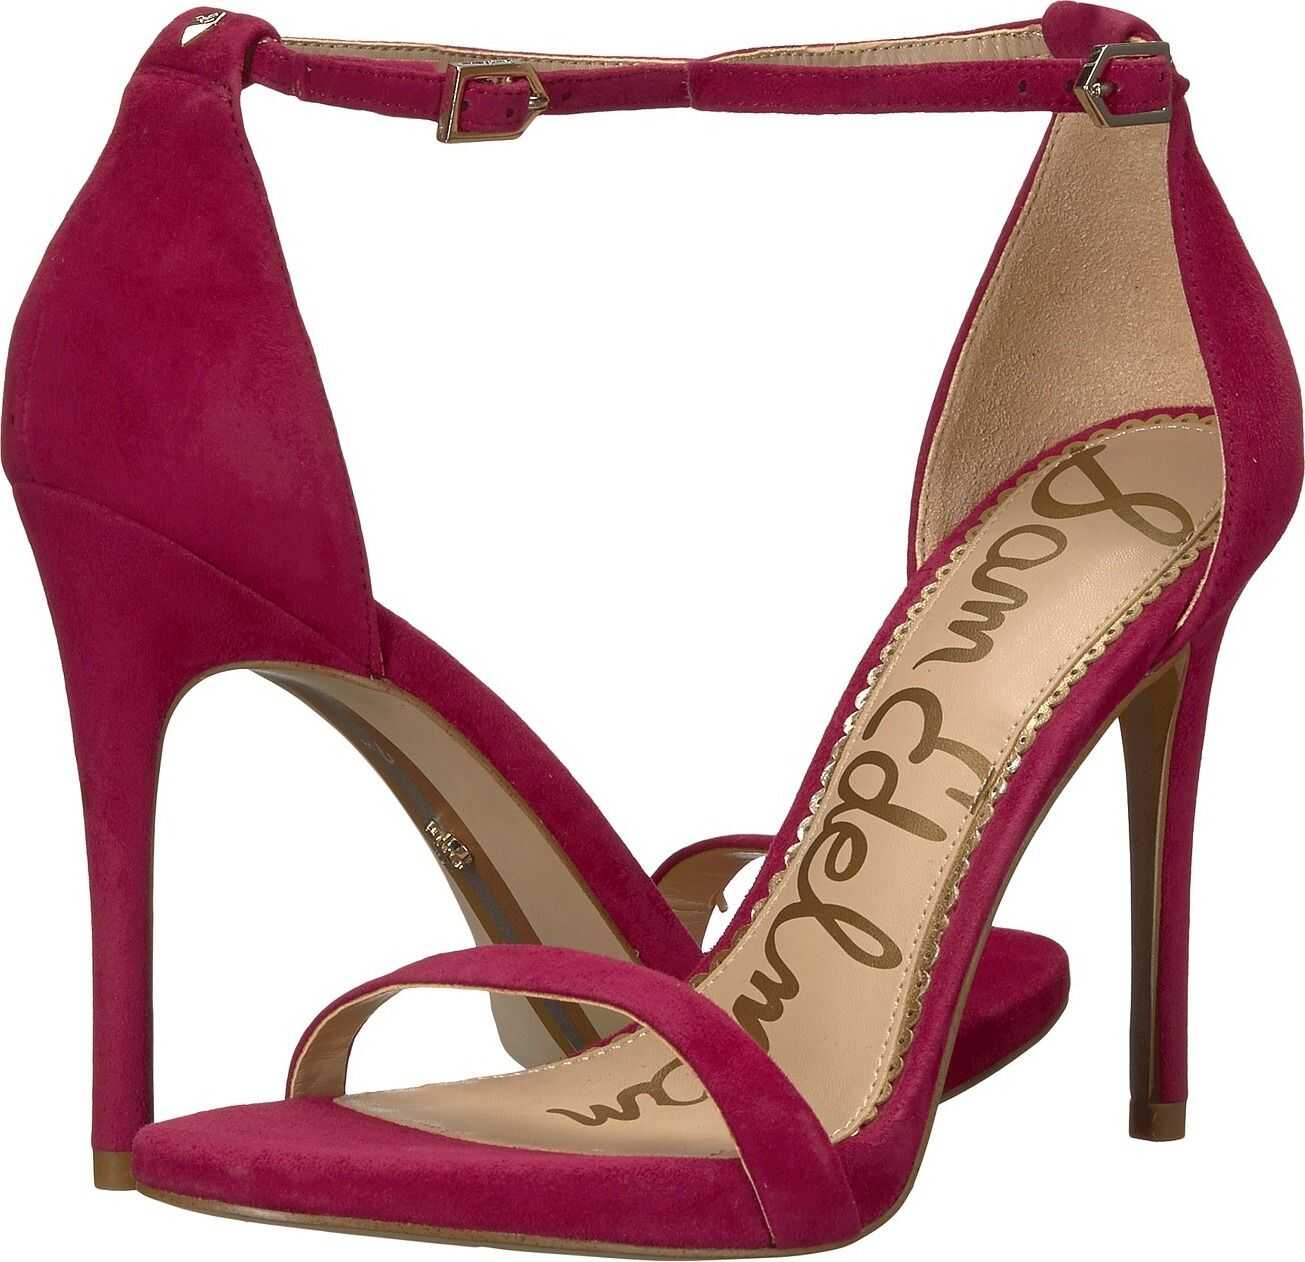 Sam Edelman Ariella Strappy Sandal Heel Pomegranate Pink Kid Suede Leather